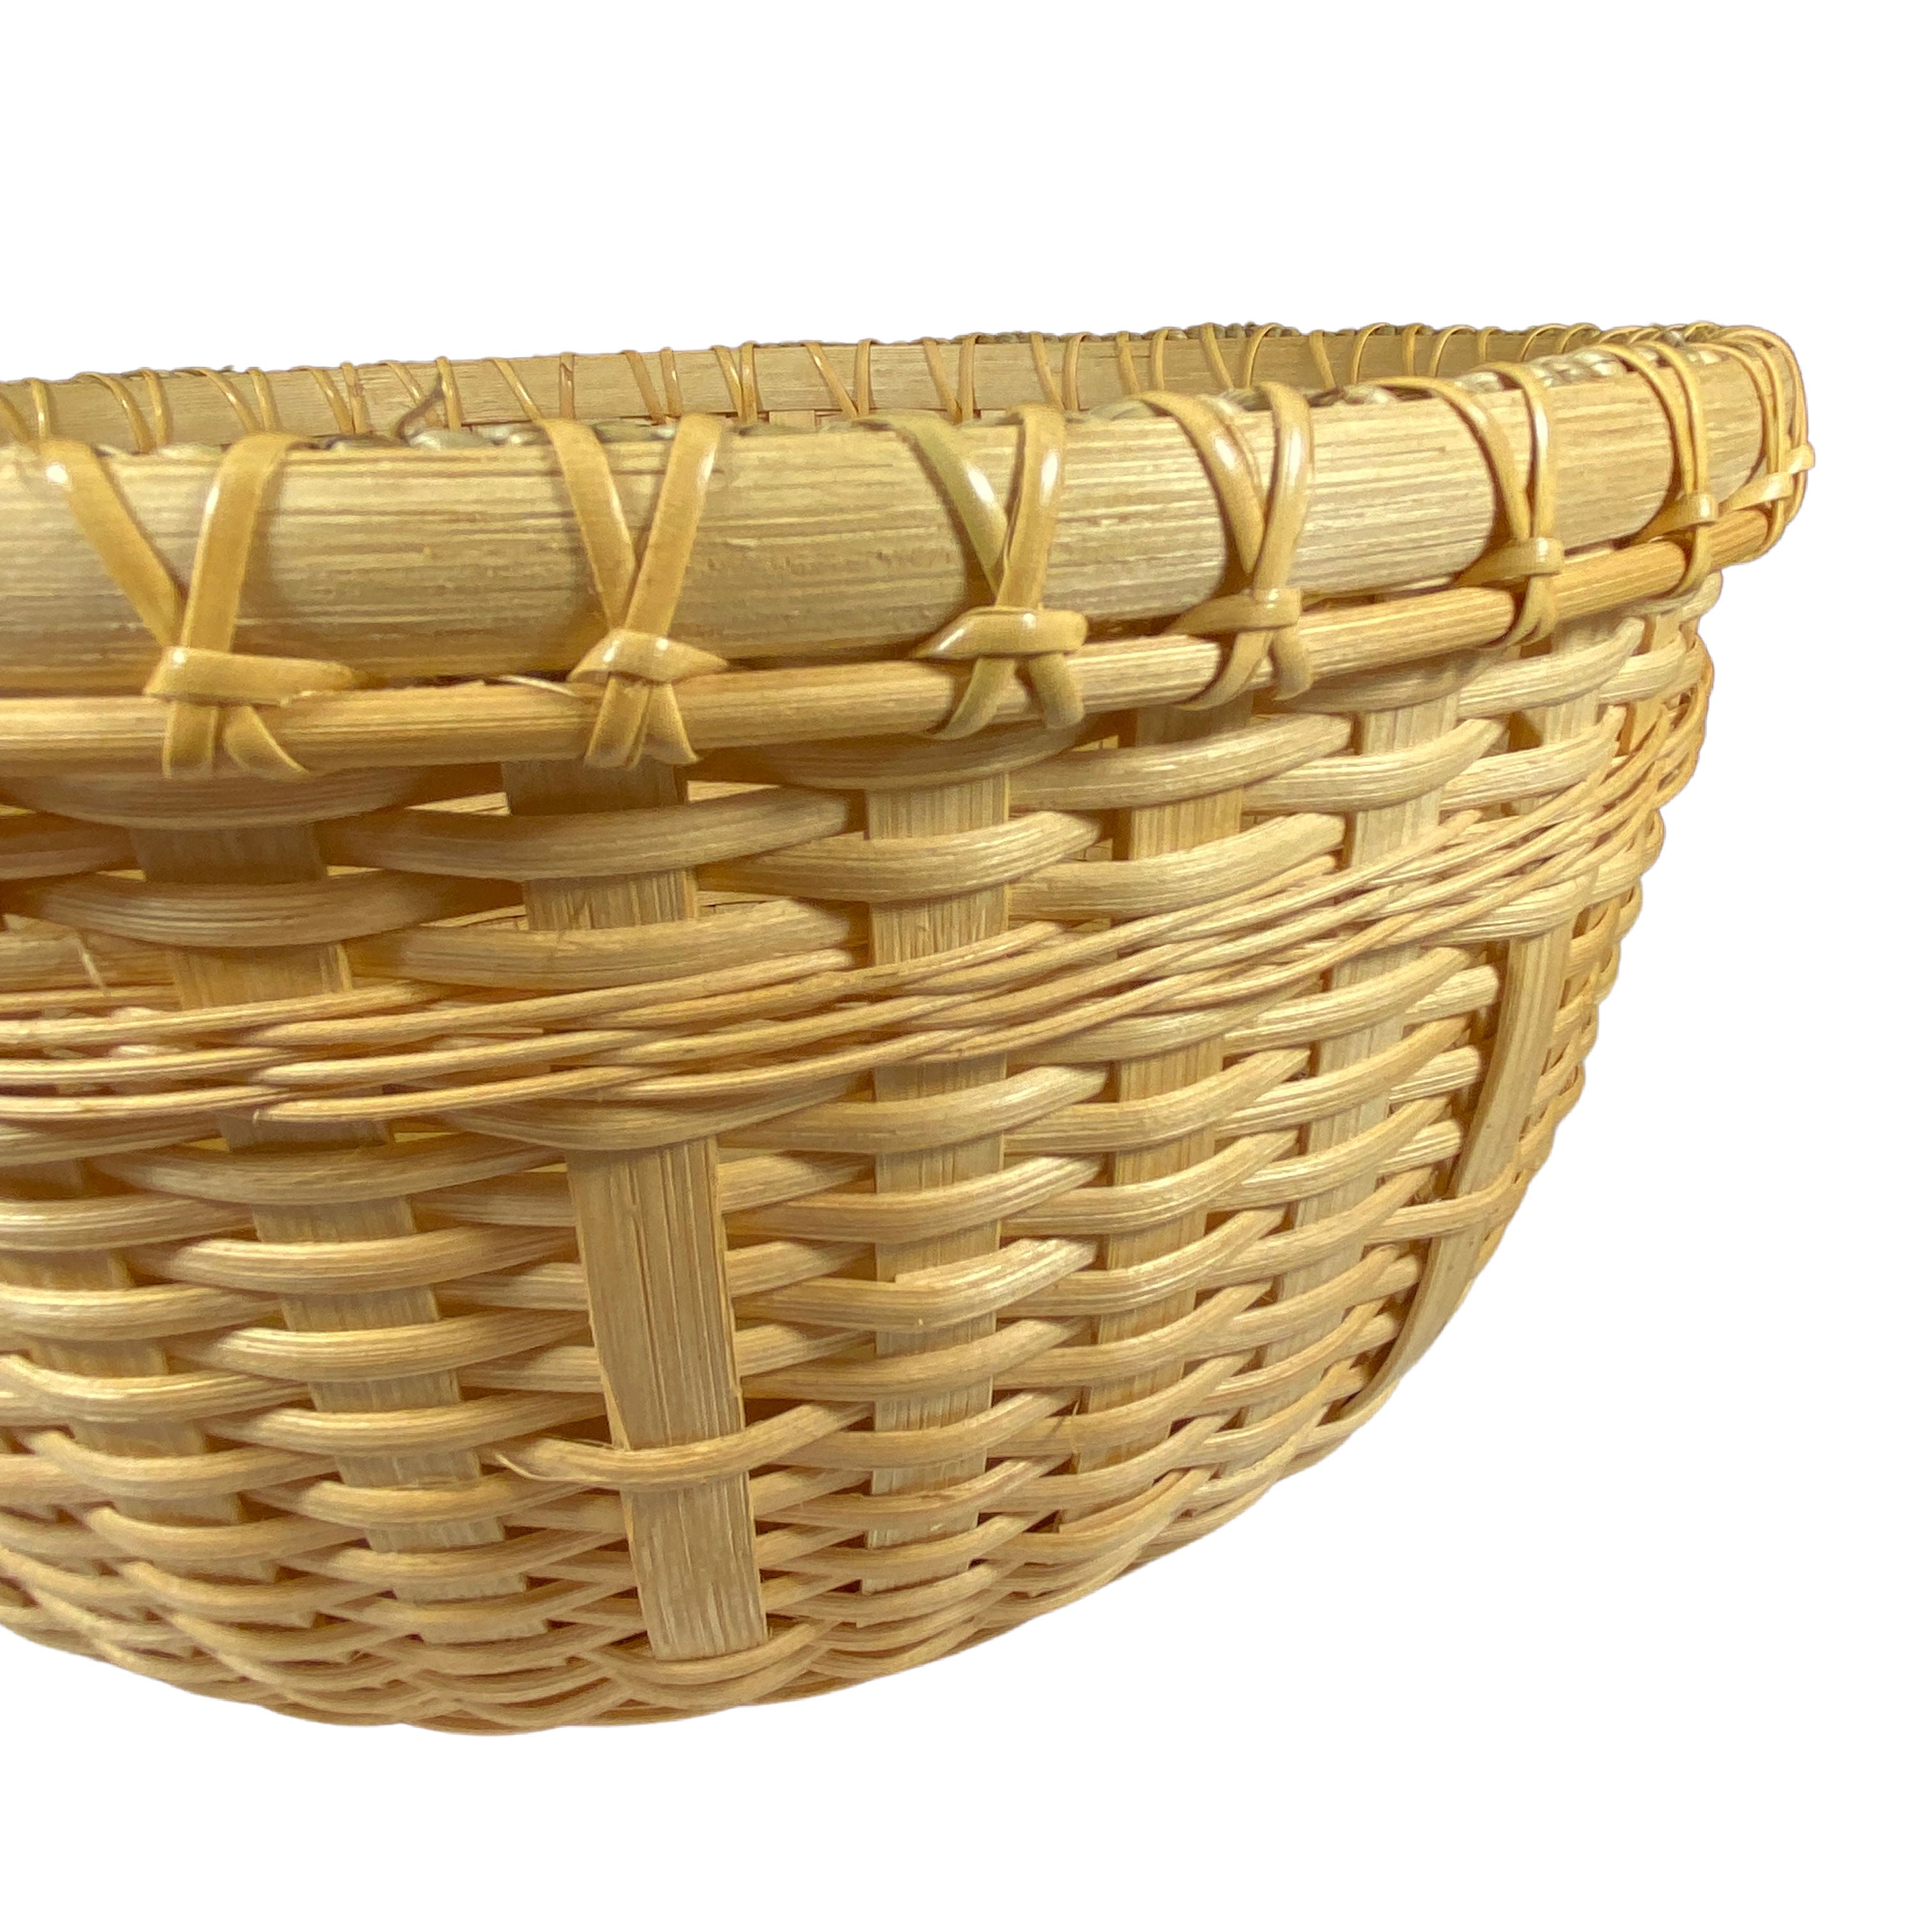 Small Round Reed Basket Kit